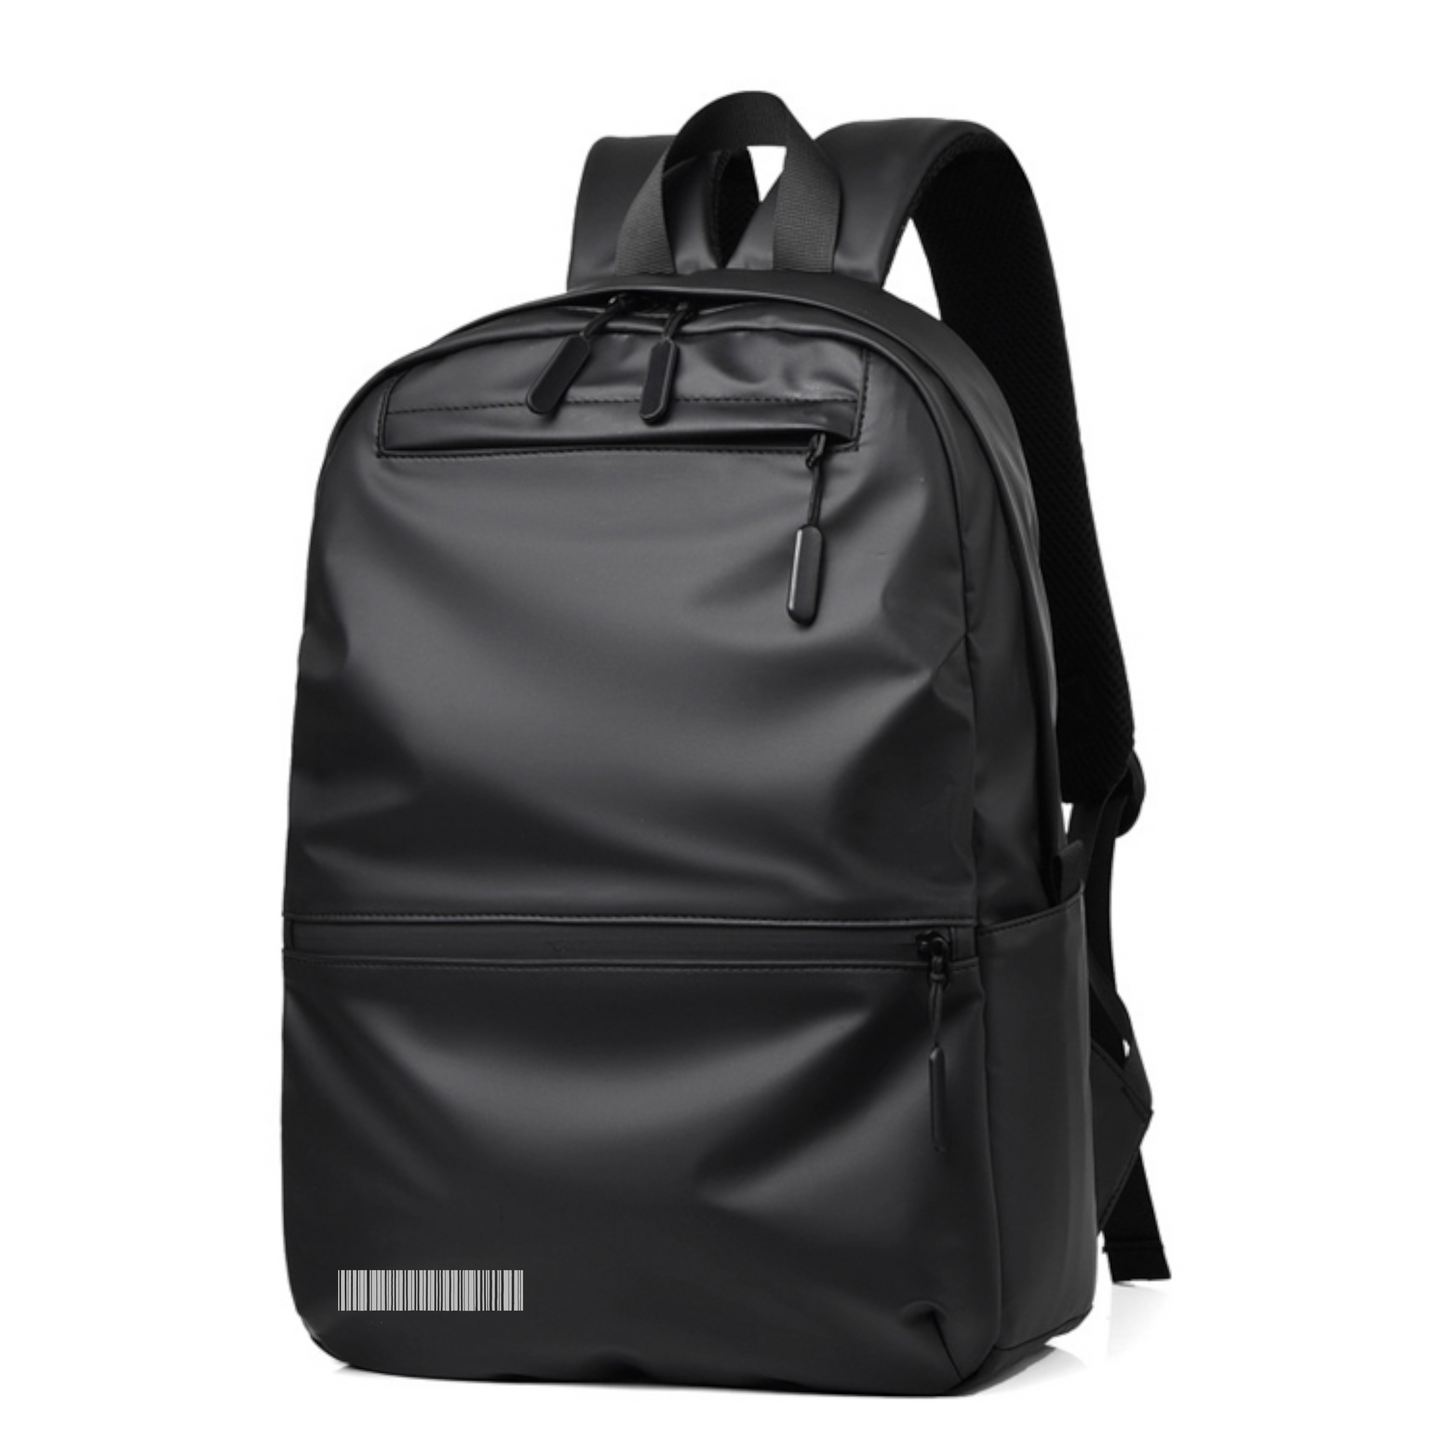 Uniforma "Back To School" Backpack